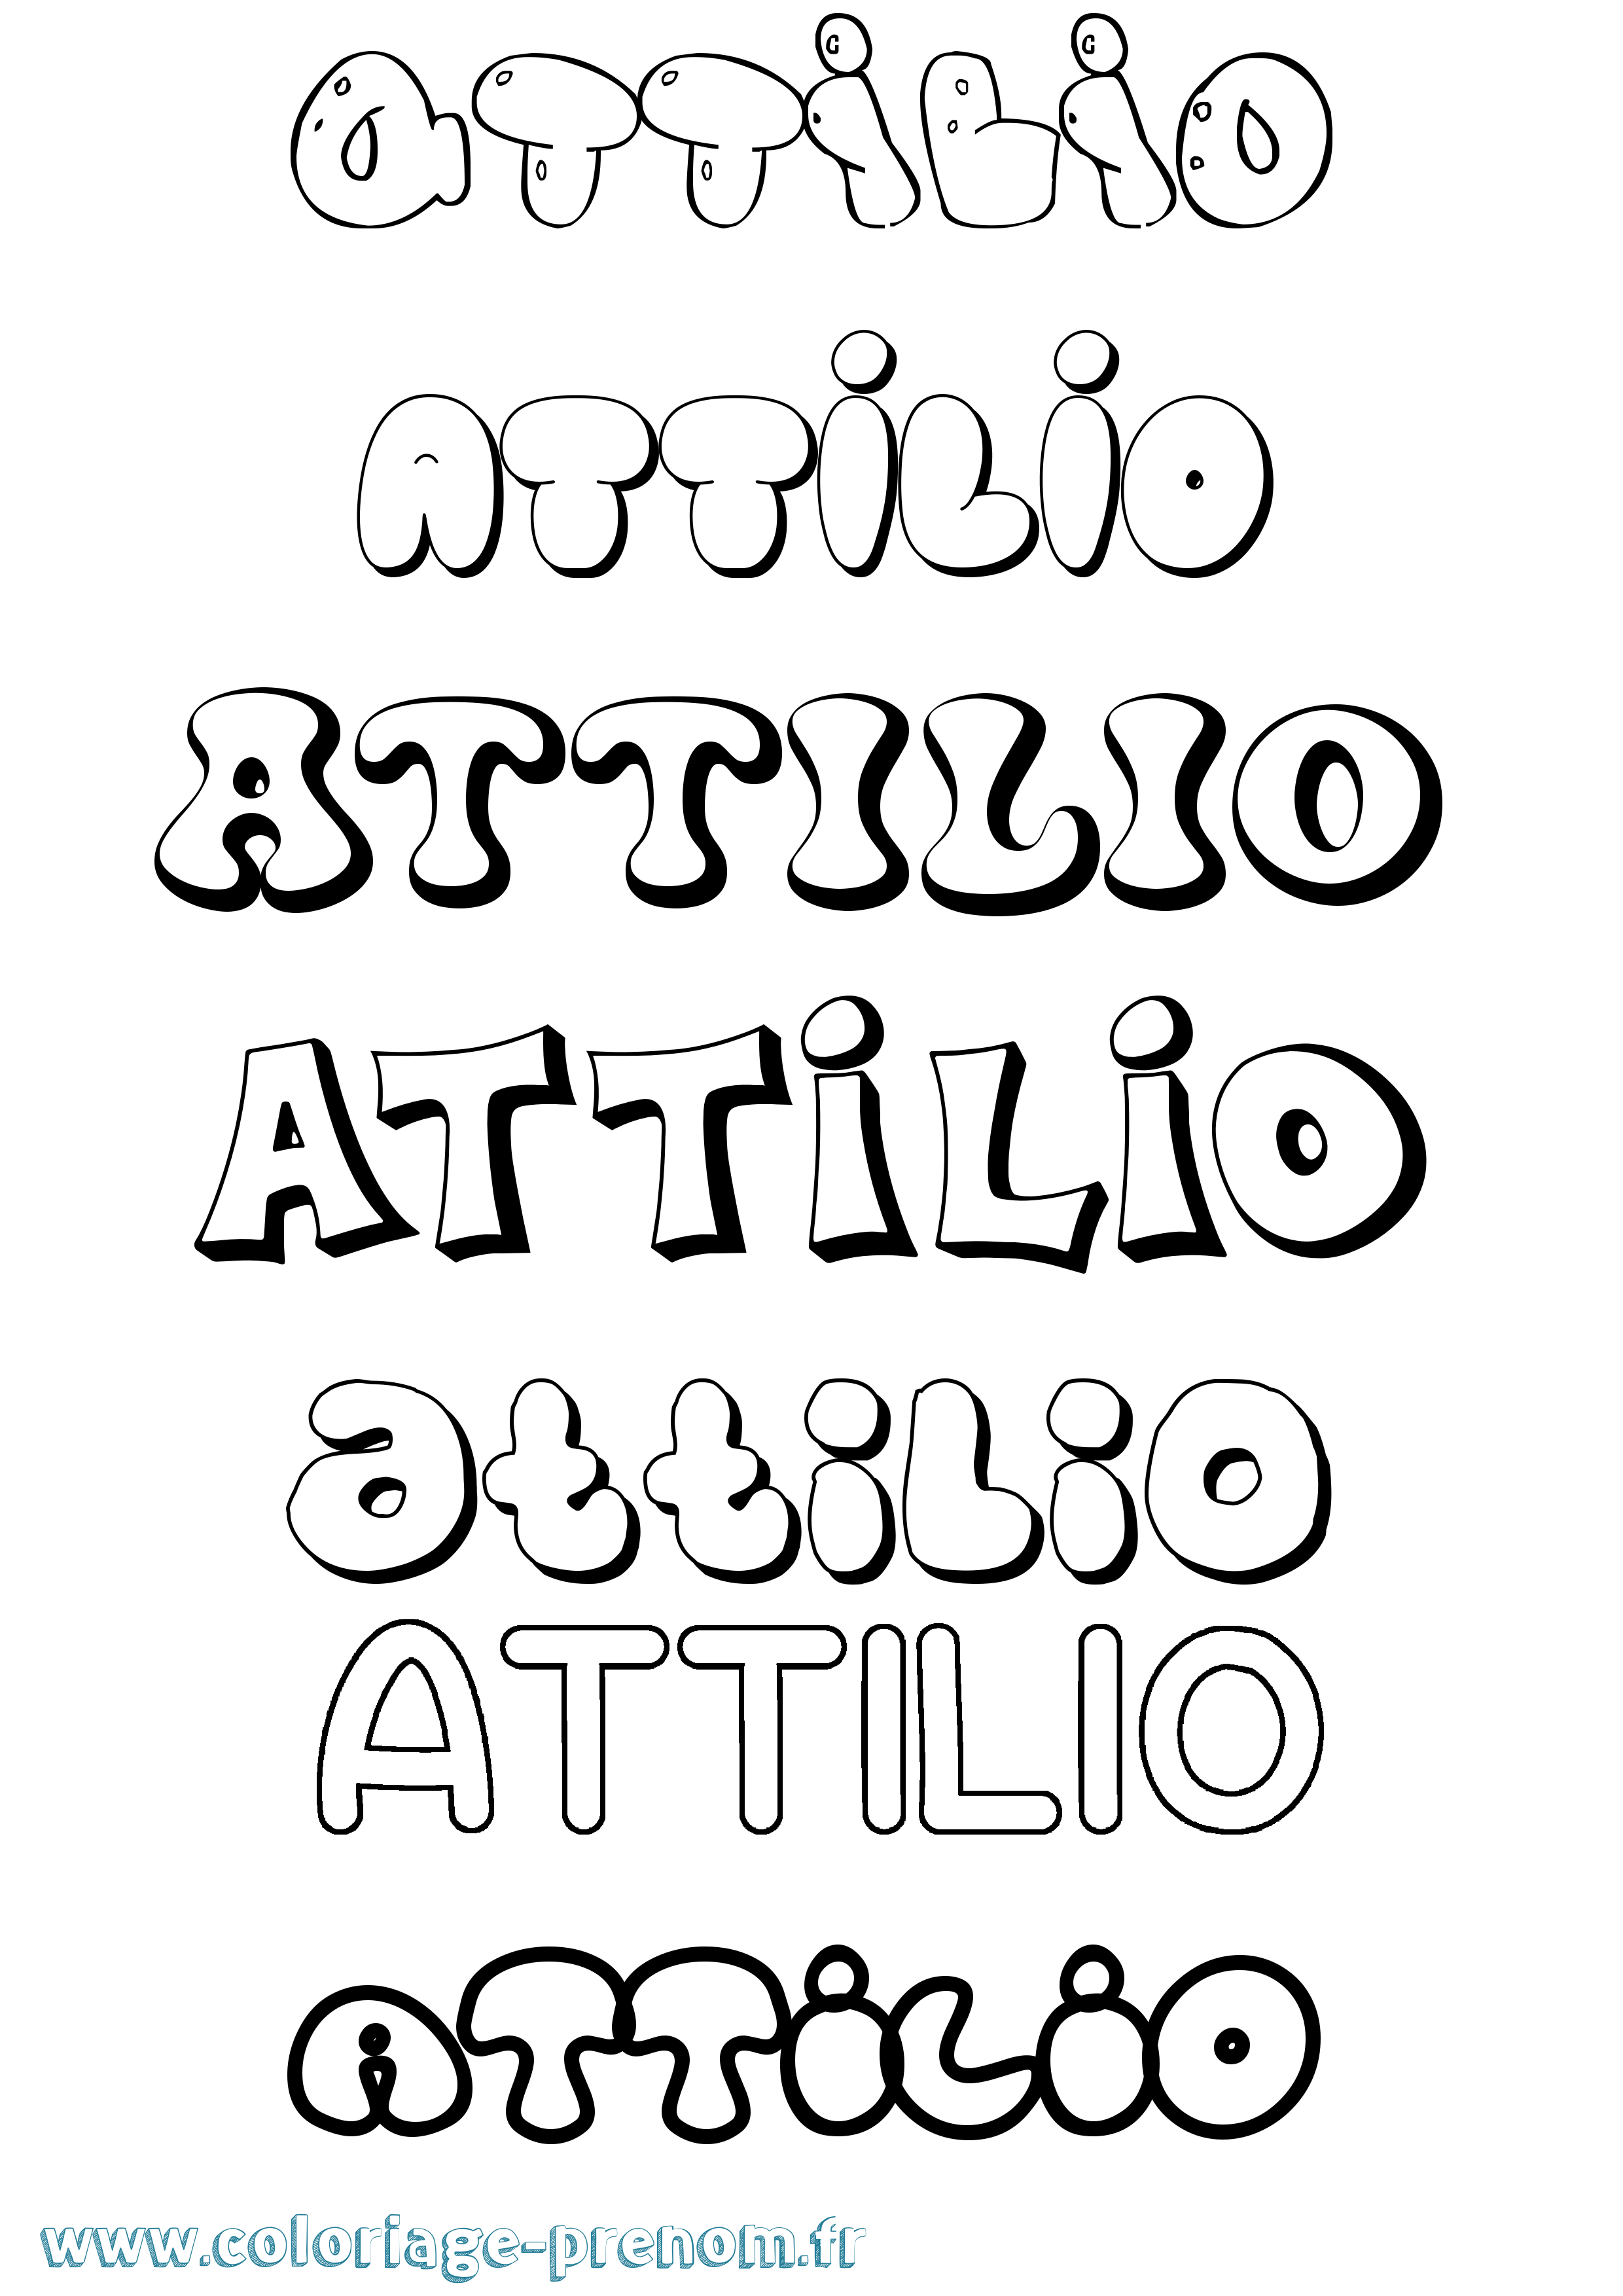 Coloriage prénom Attilio Bubble